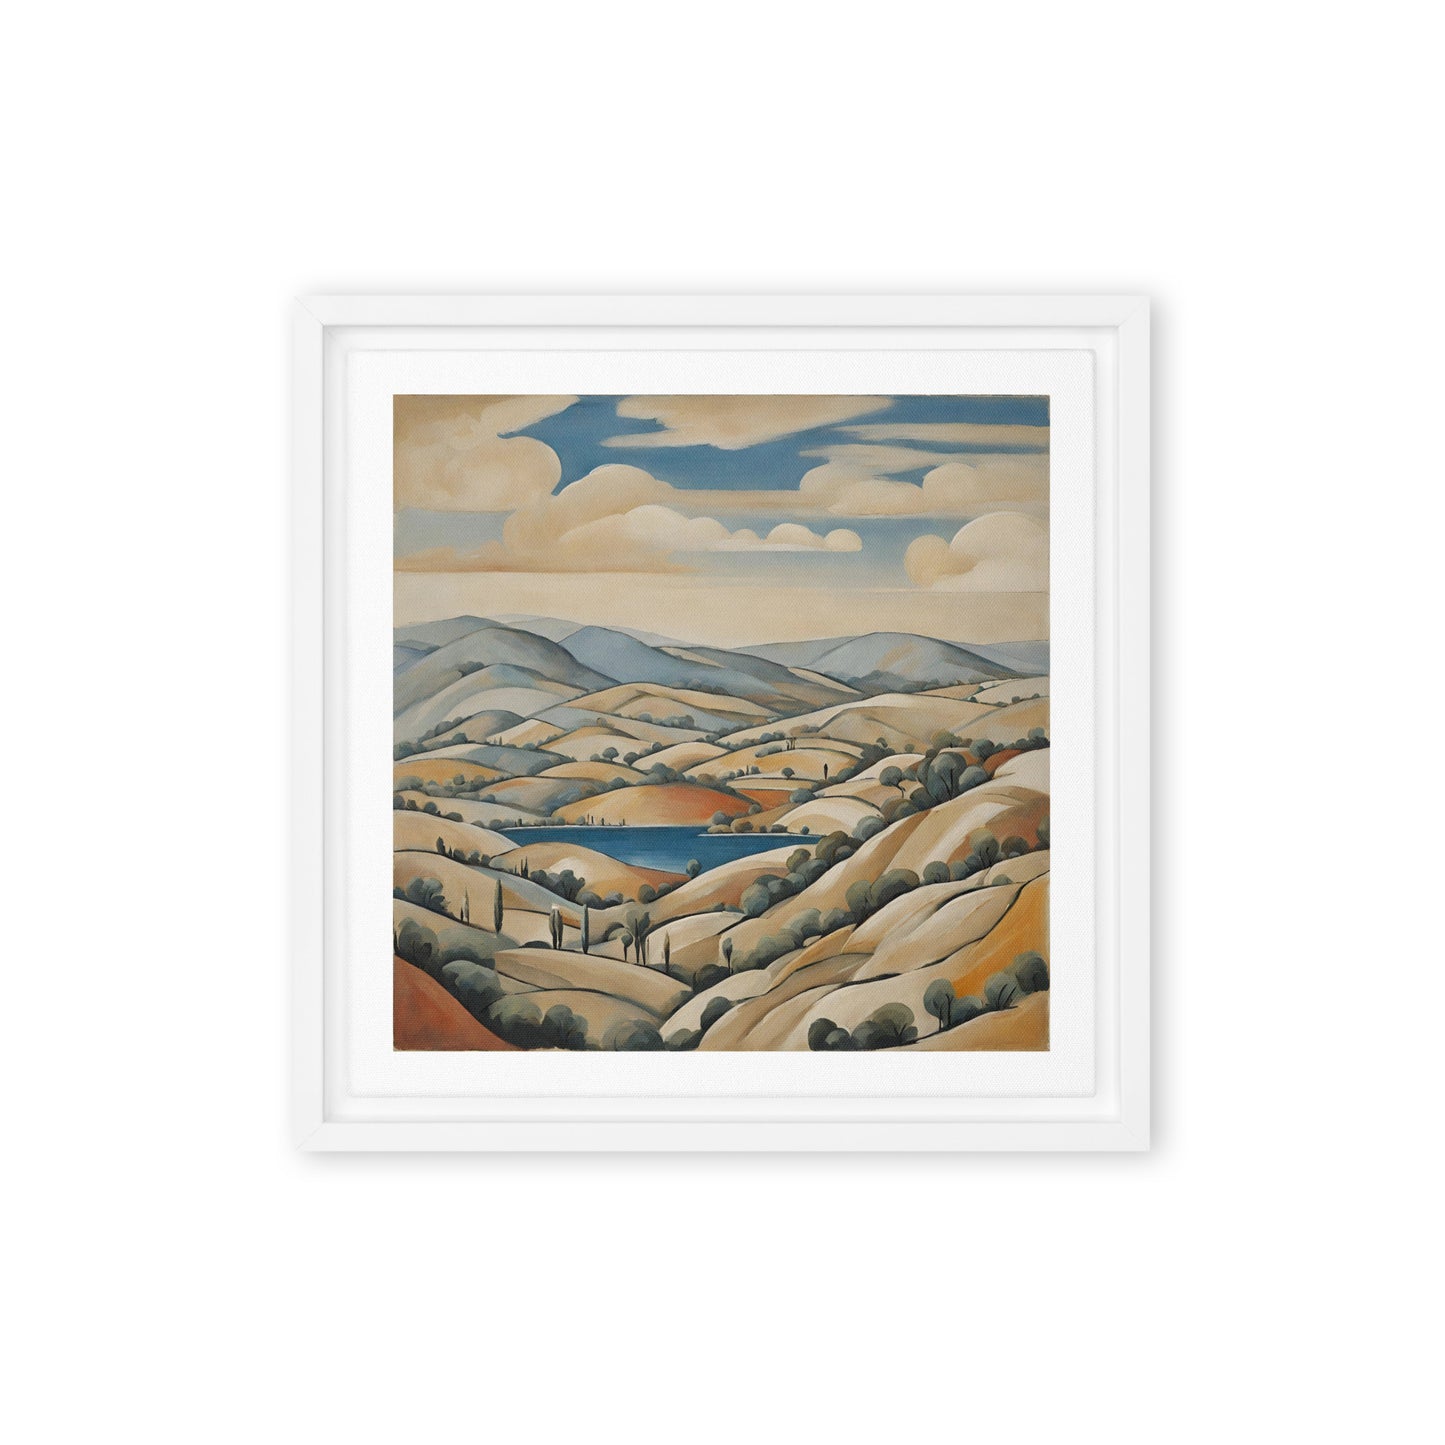 Spanish hills - Framed canvas